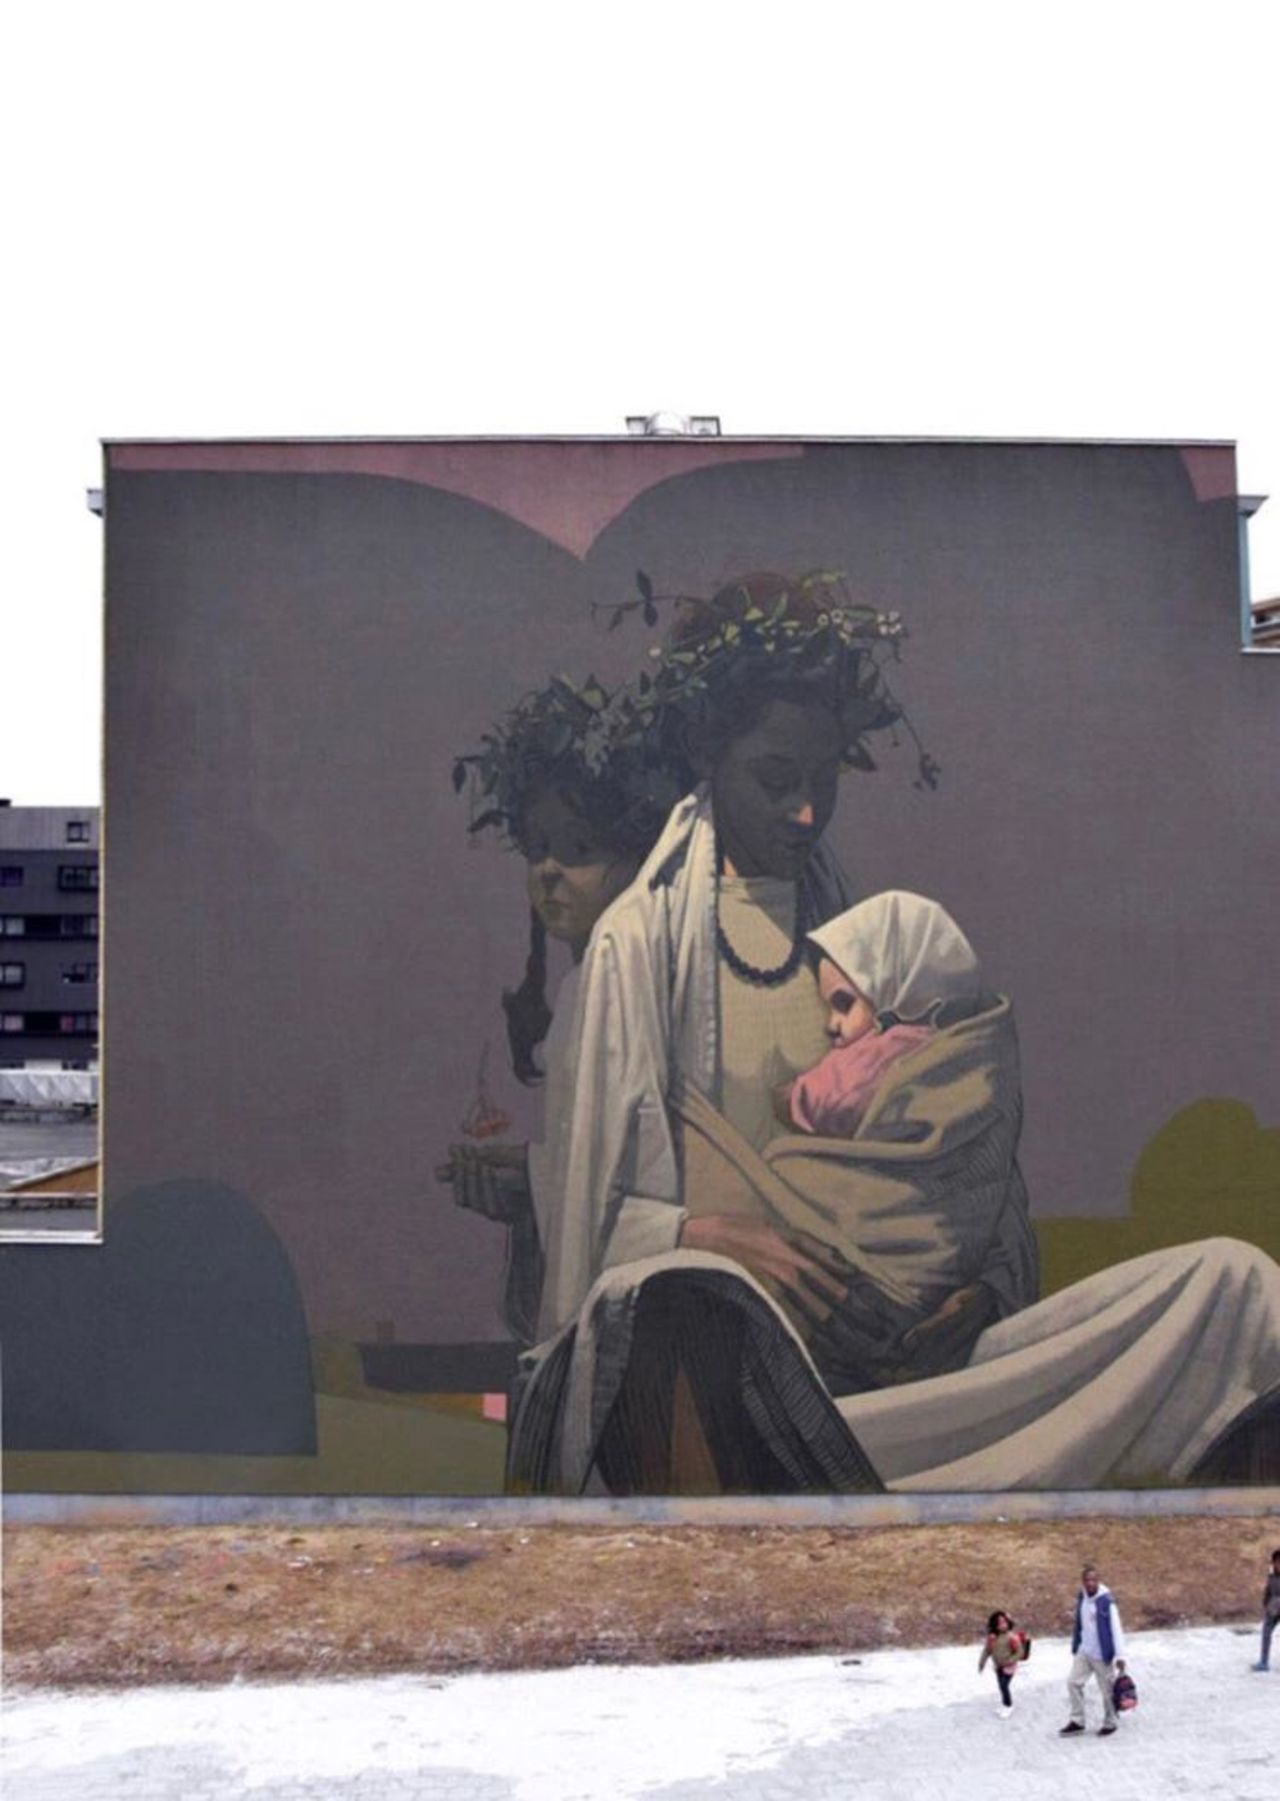 New work by ETAM SAINER #streetart #mural #graffiti #art https://t.co/QJXTtTpskM